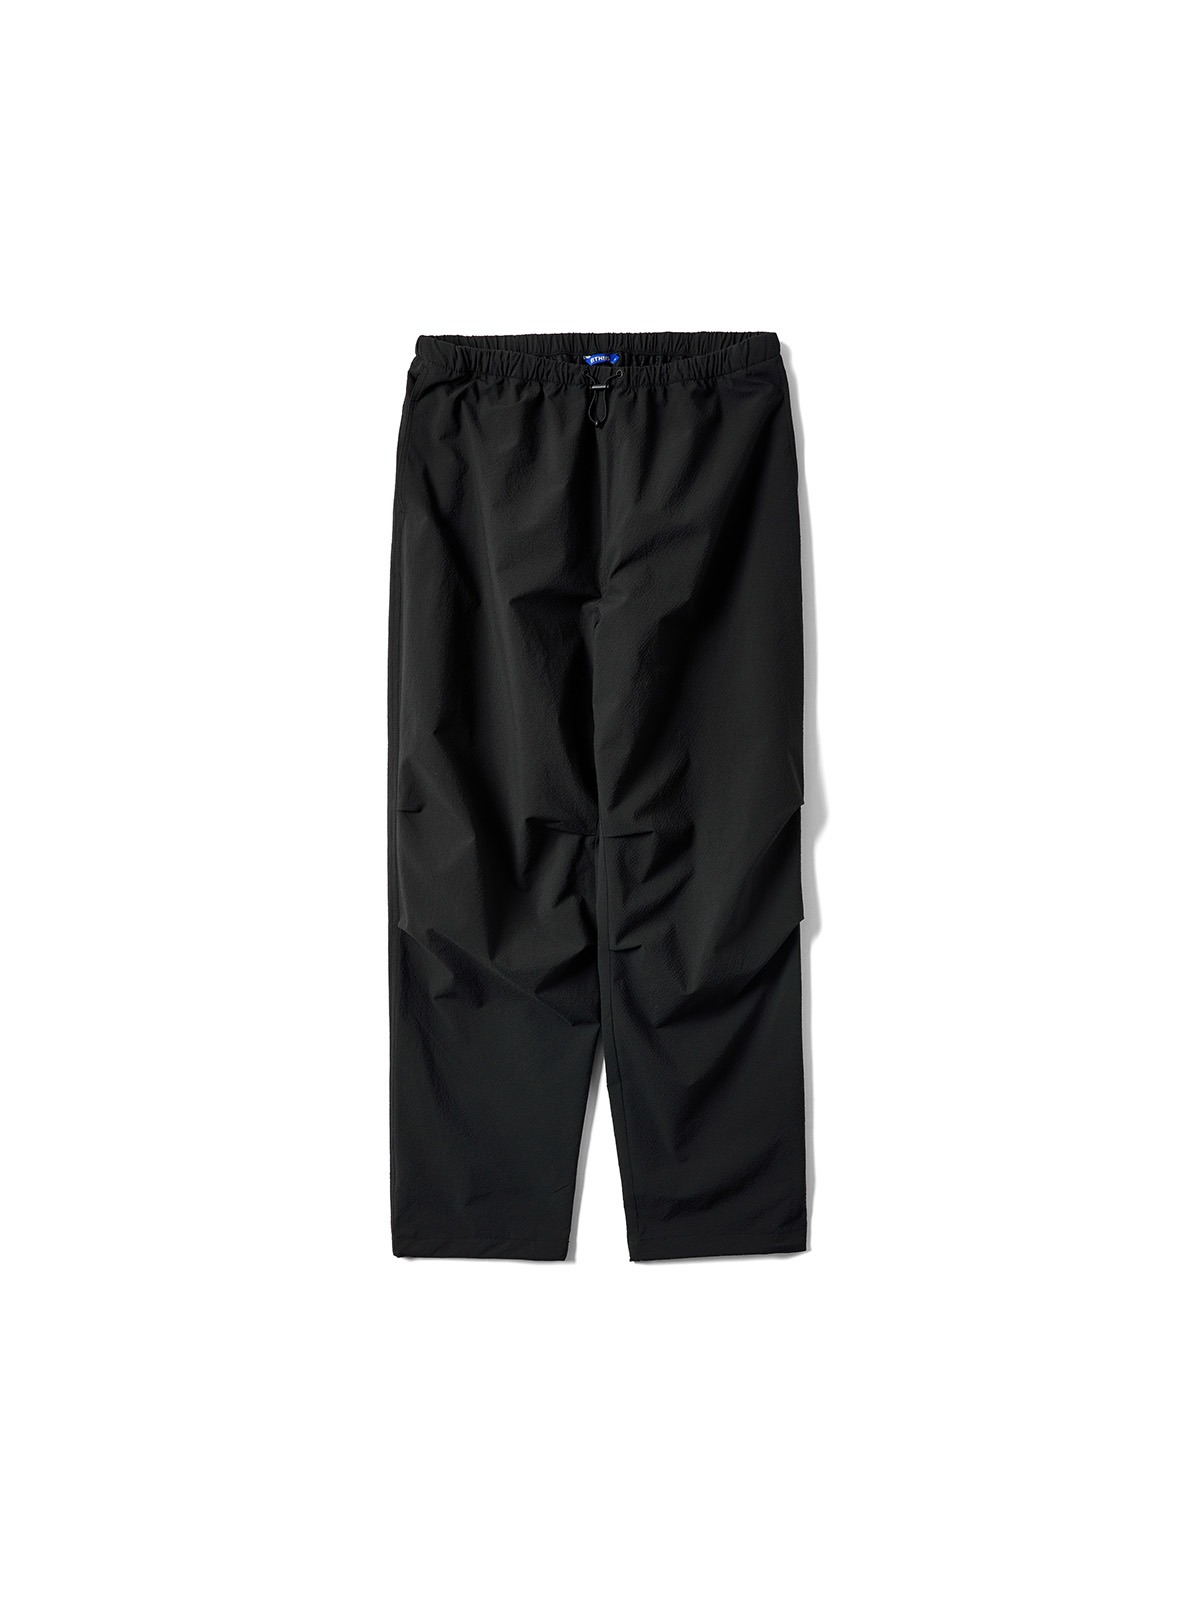 Camper Pants (Black)